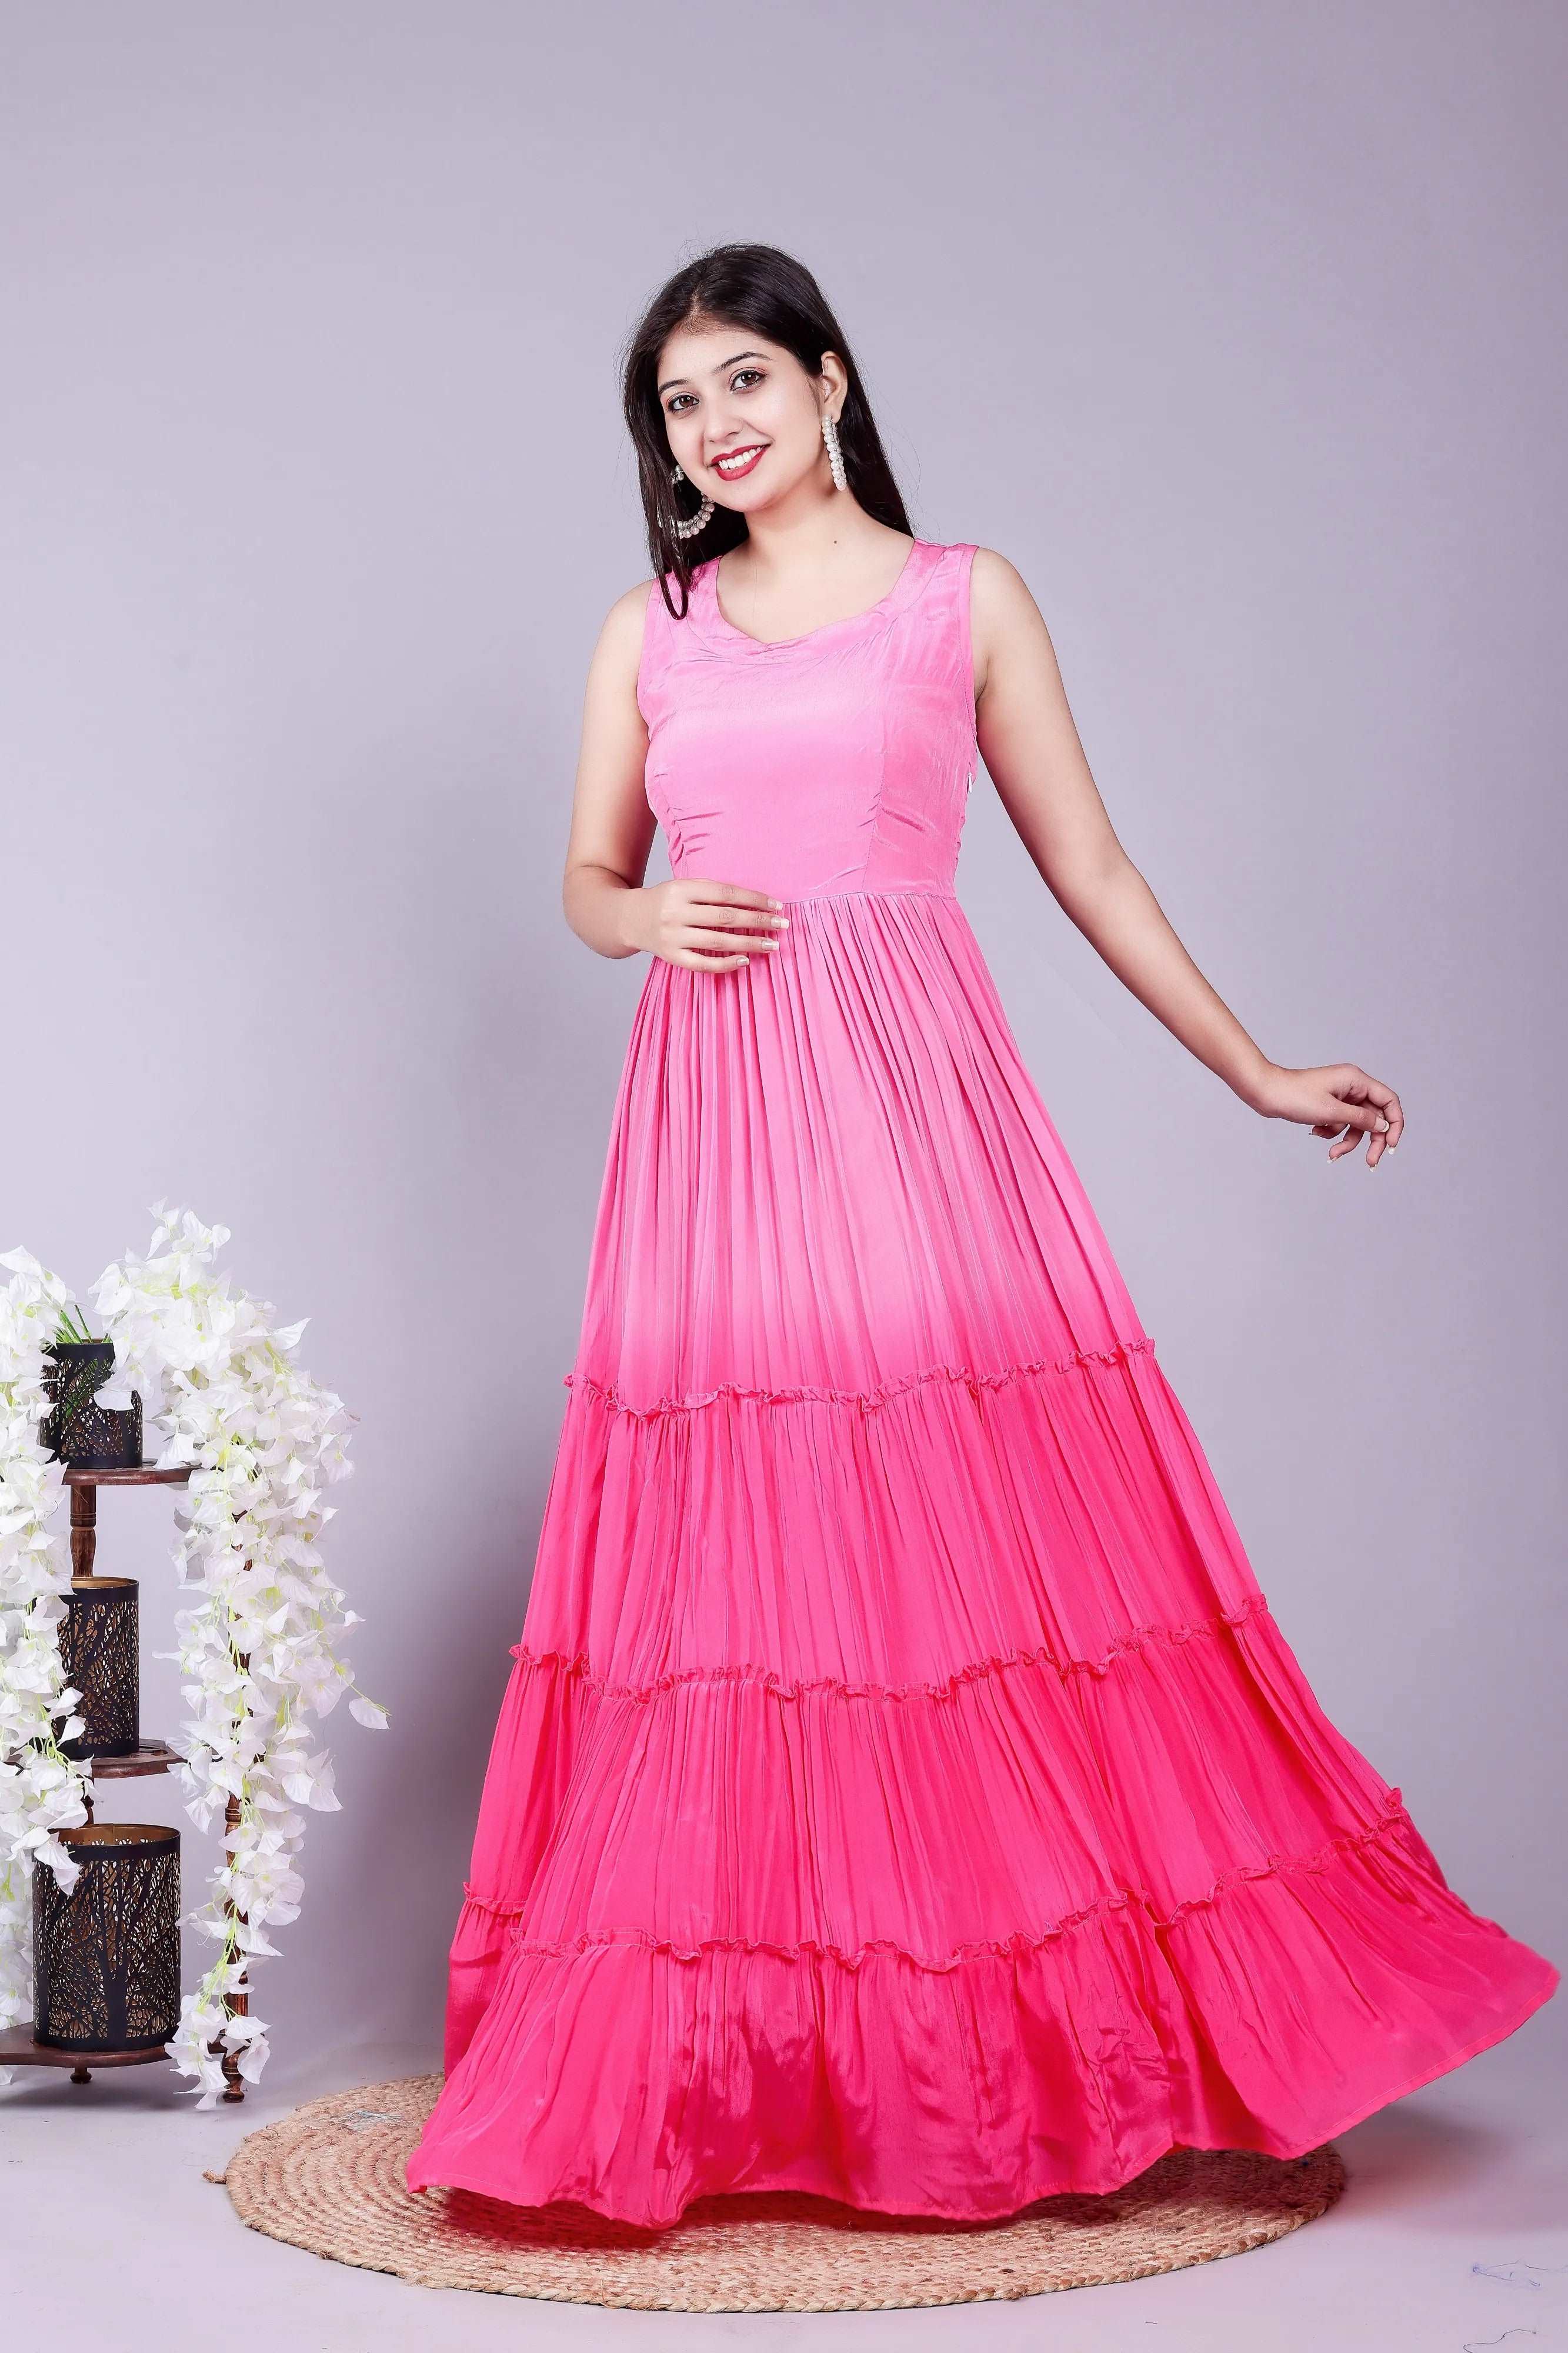 Nude Pink color dress formal party vintage style light sundress wedding  dress - Shop ameliadress One Piece Dresses - Pinkoi